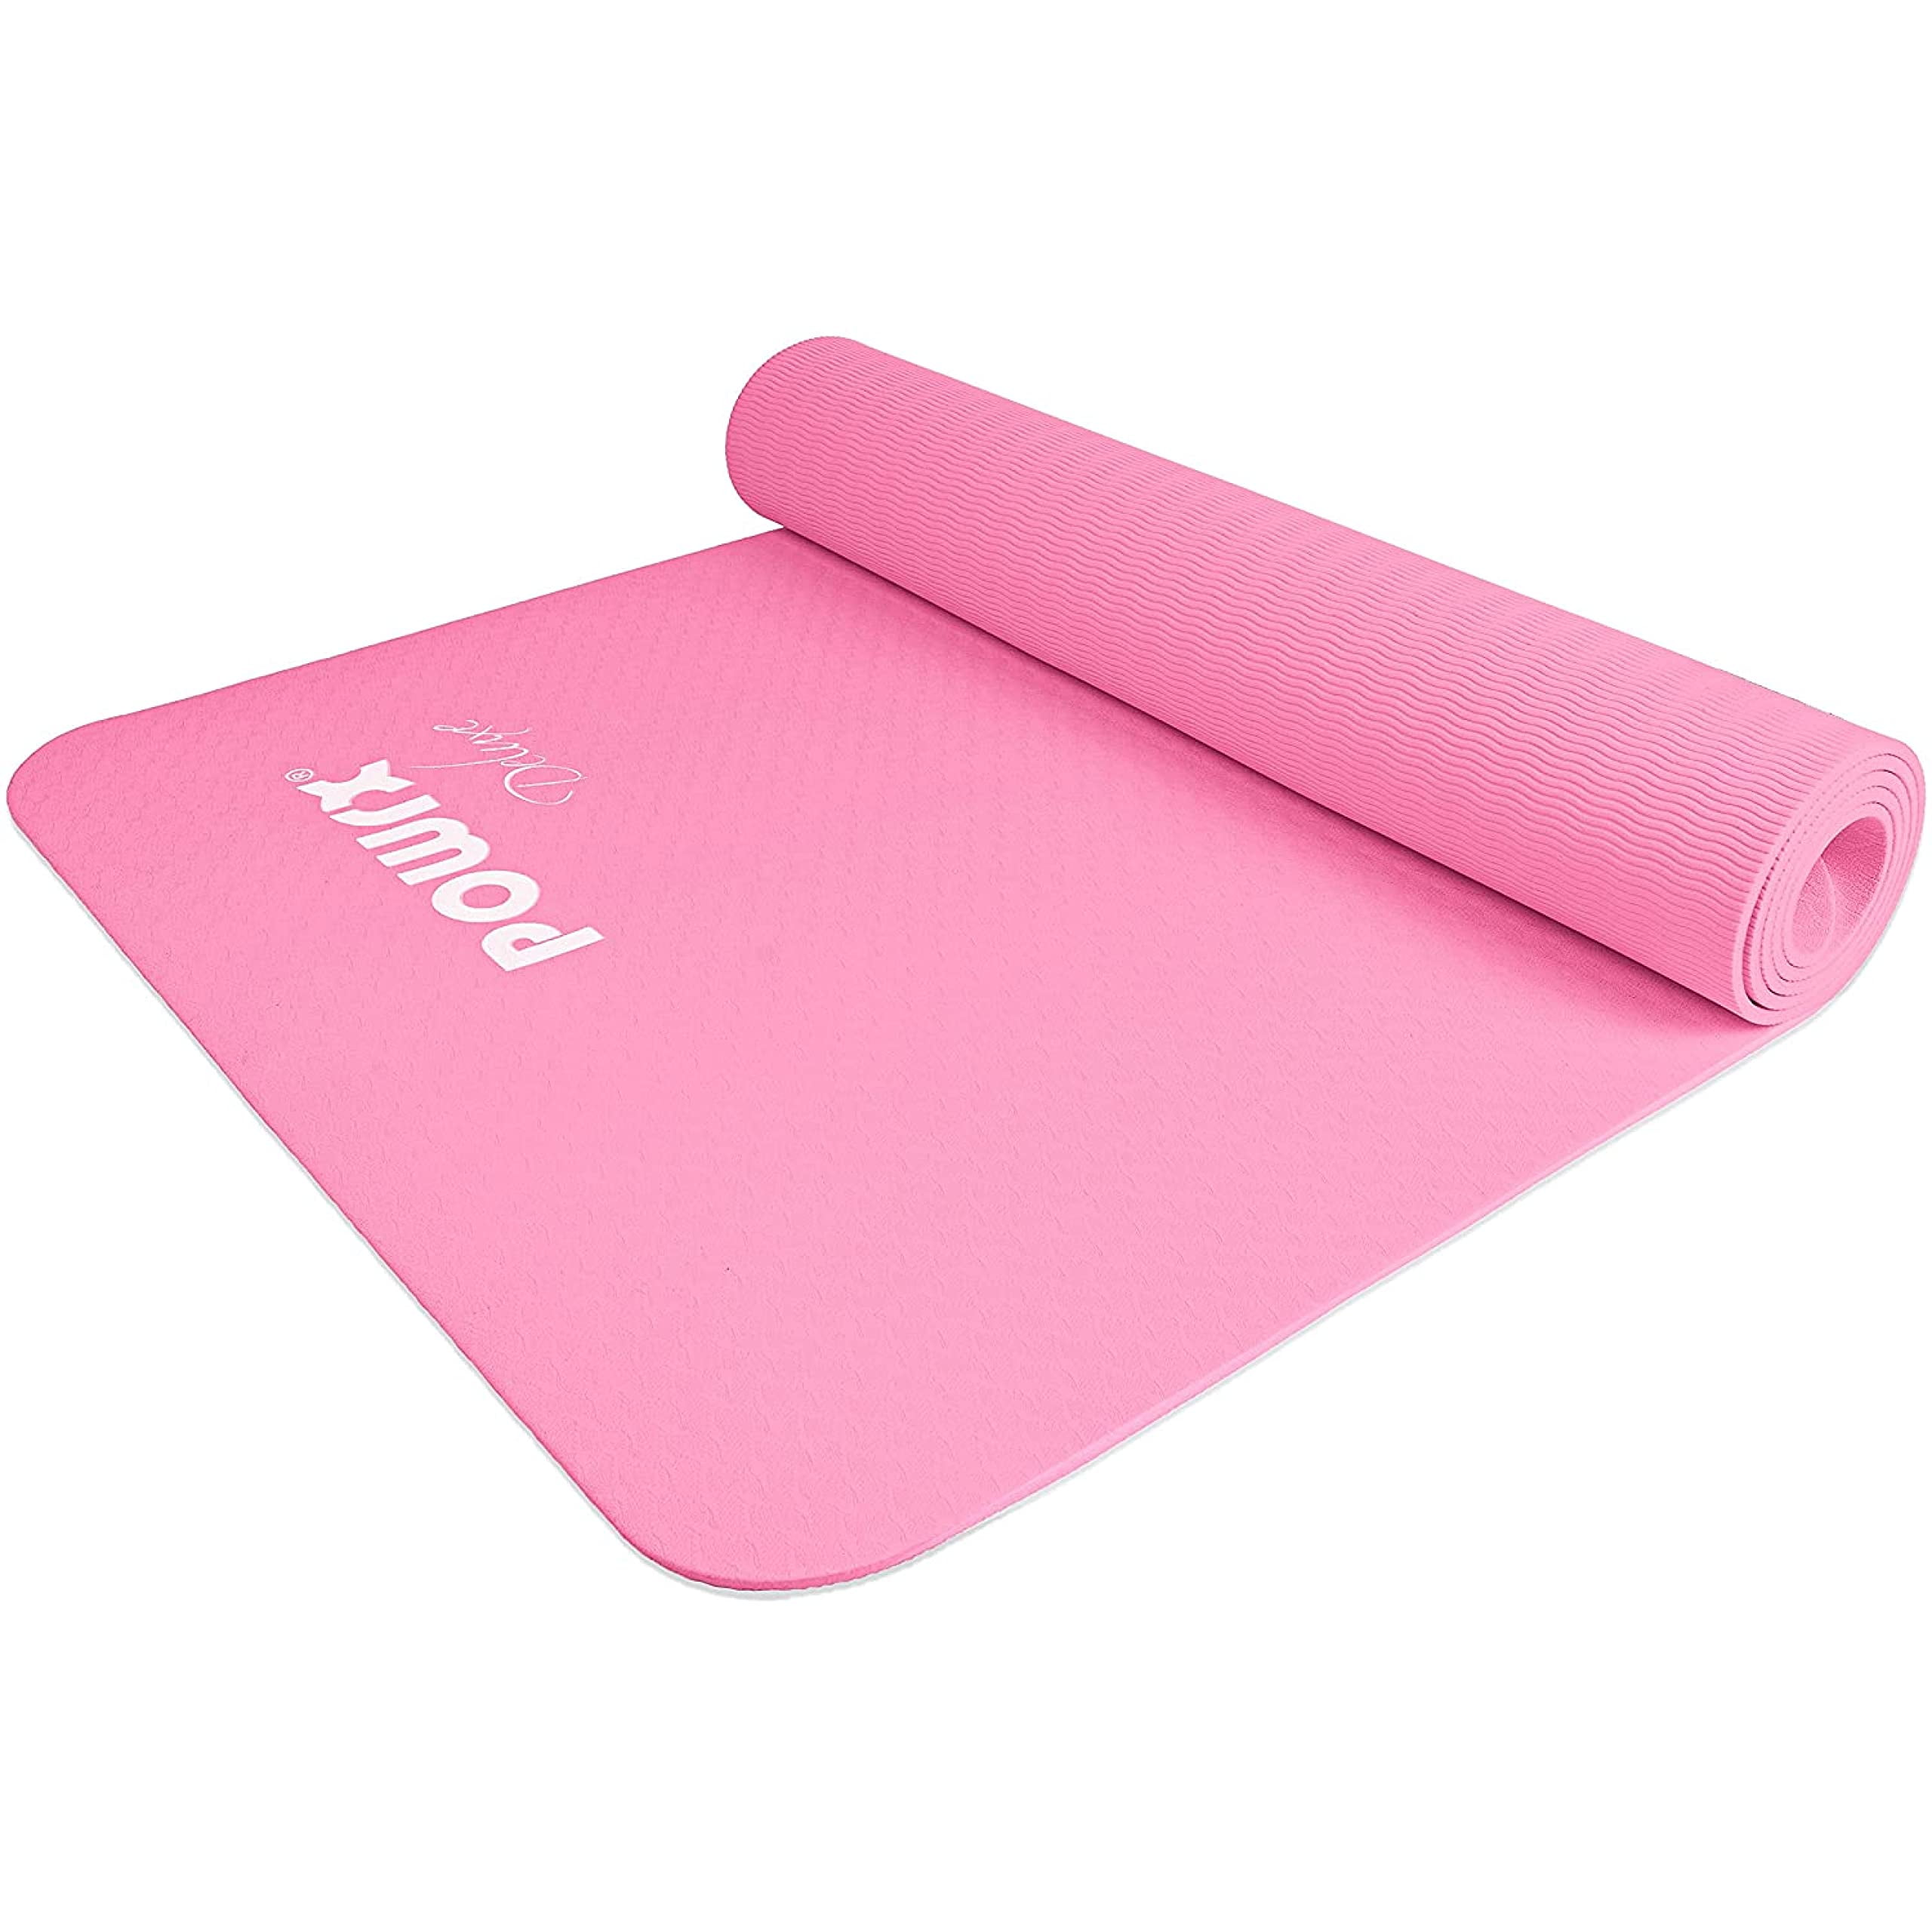 POWRX Yoga Mat TPE with Bag, Exercise mat for workout